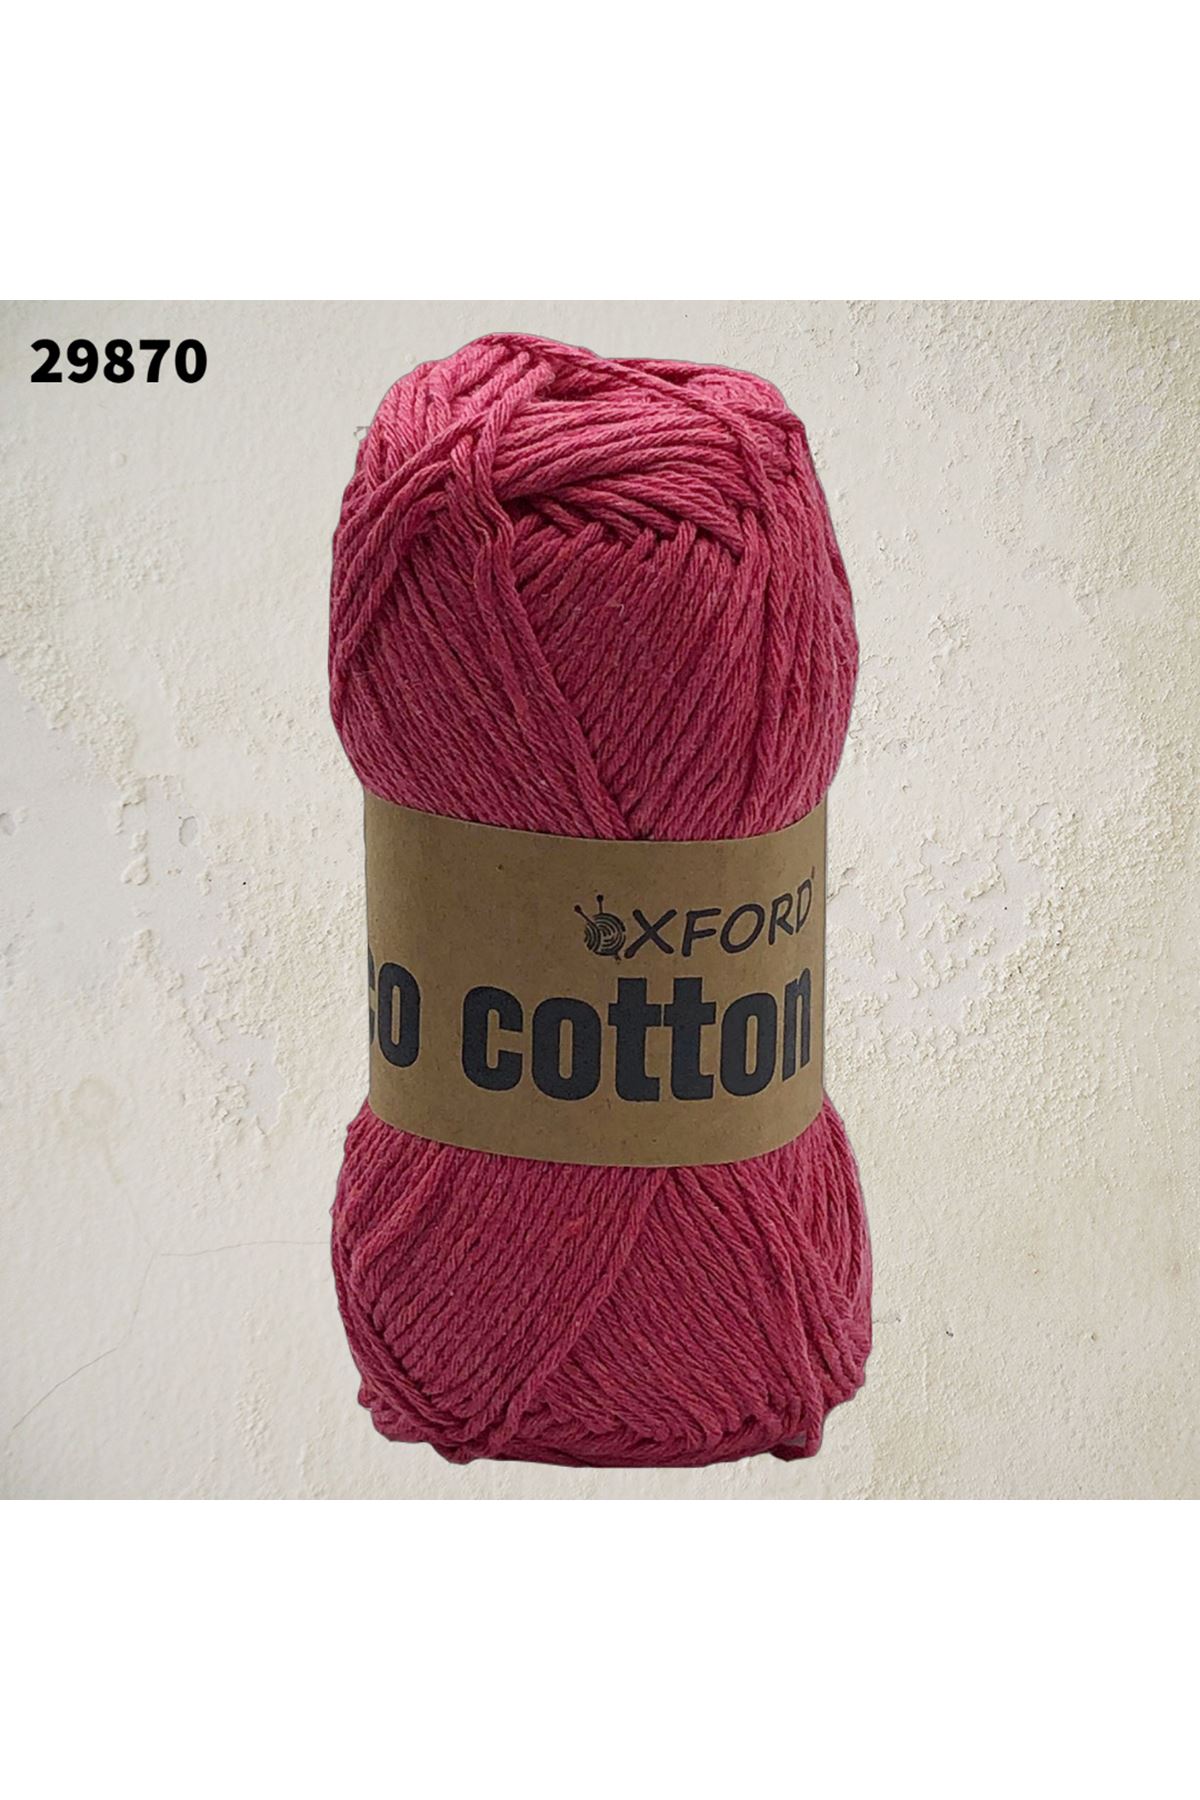 Eco Cotton 100 gram - 29870 - Fuşya